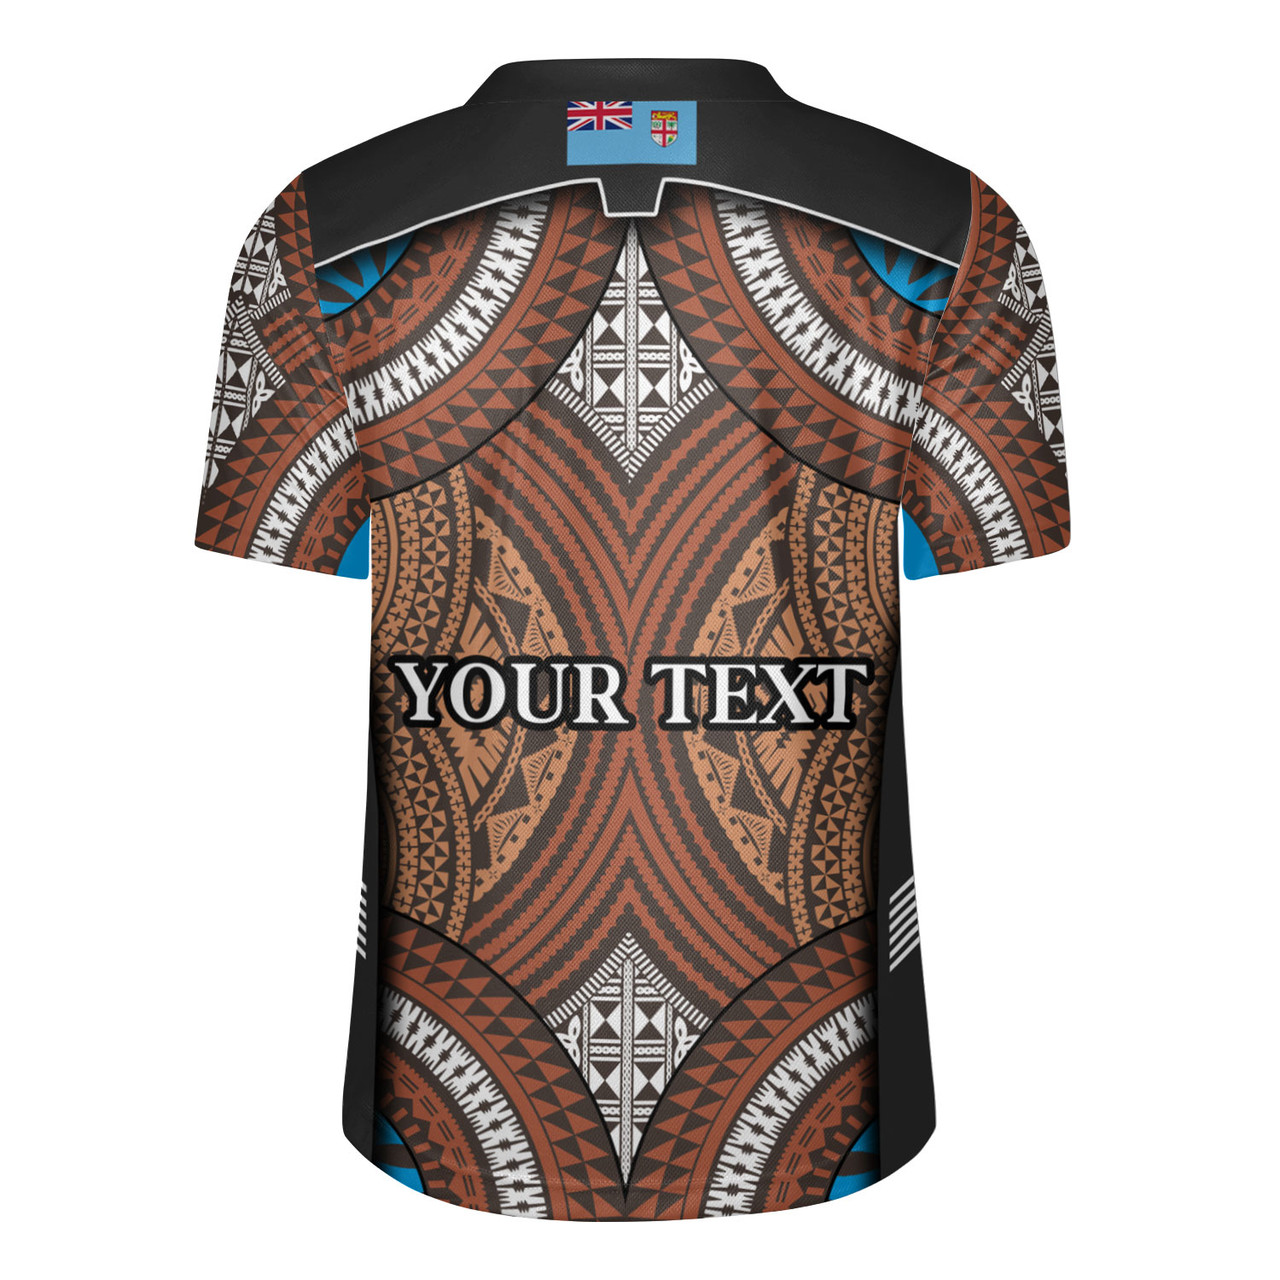 Fiji Rugby Jersey Custom Bula Fiji Rugby Tapa Design